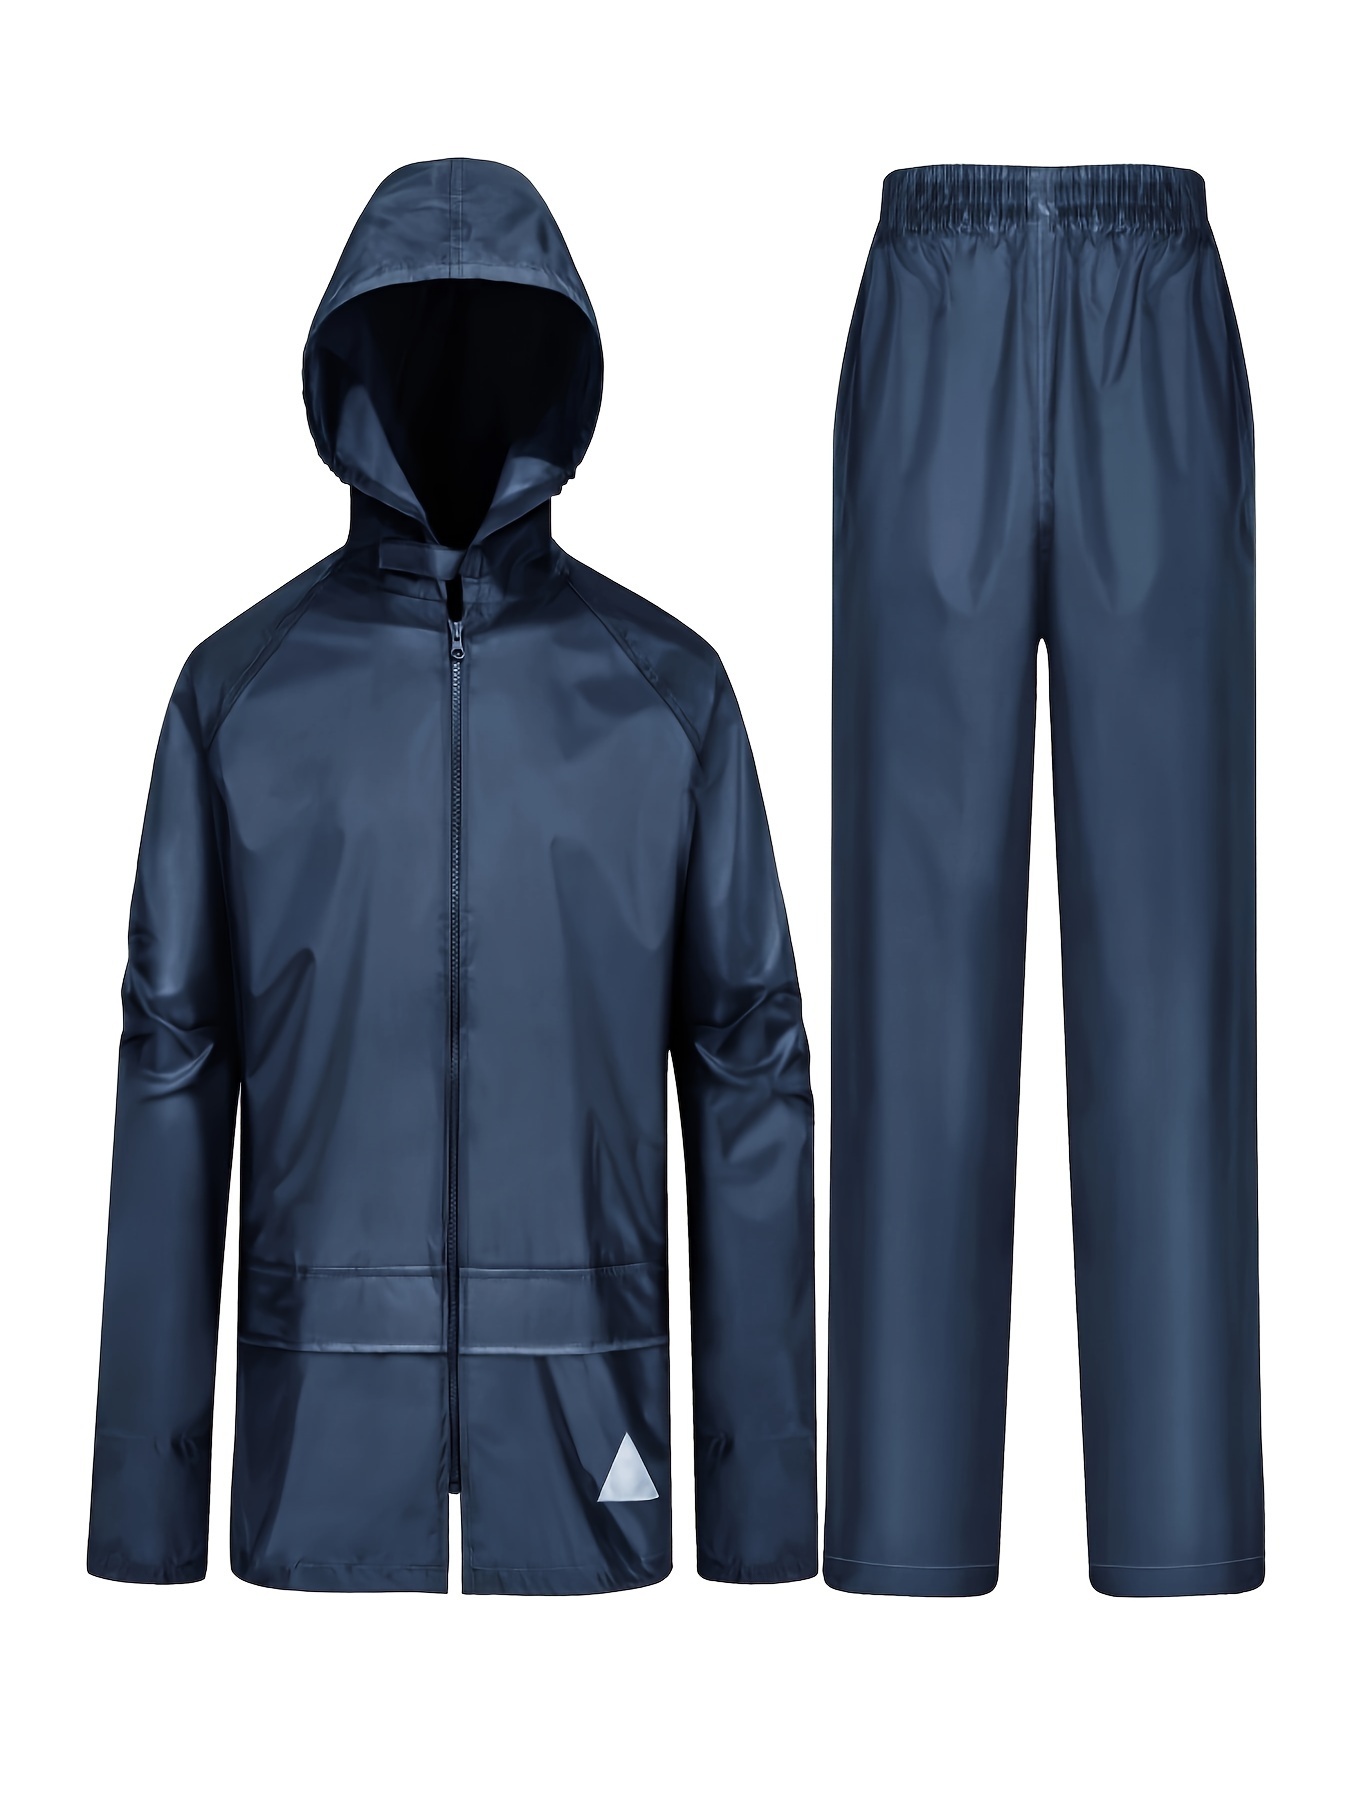 33,000ft Men's Waterproof Rainsuit Hooded Rain Jacket Rain Trousers Packable Raincoat Sets Windproof Two Piece Rain Suit With Safety Reflectors For